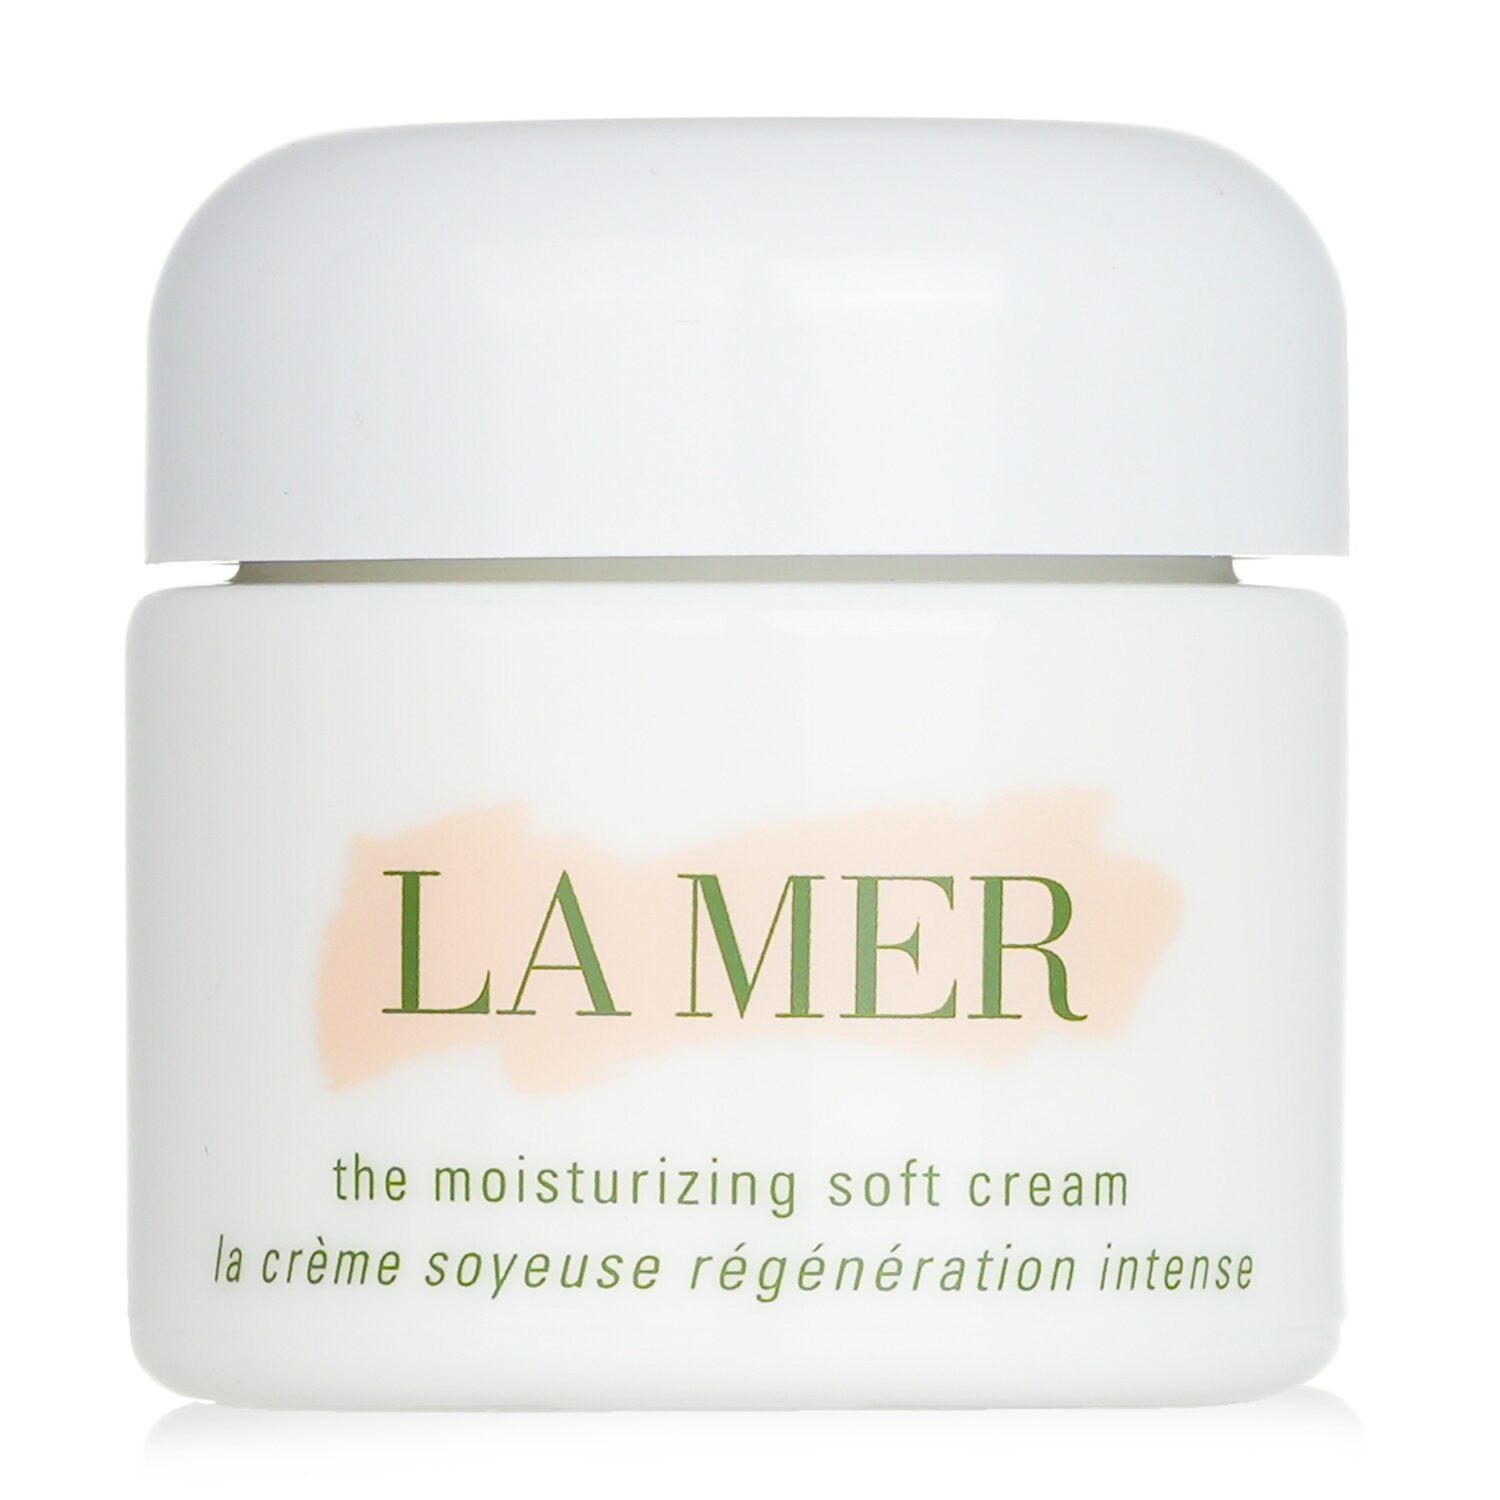 LA MER - The Moisturizing Soft Cream - 60ml/2oz 3P's Inclusive Beauty